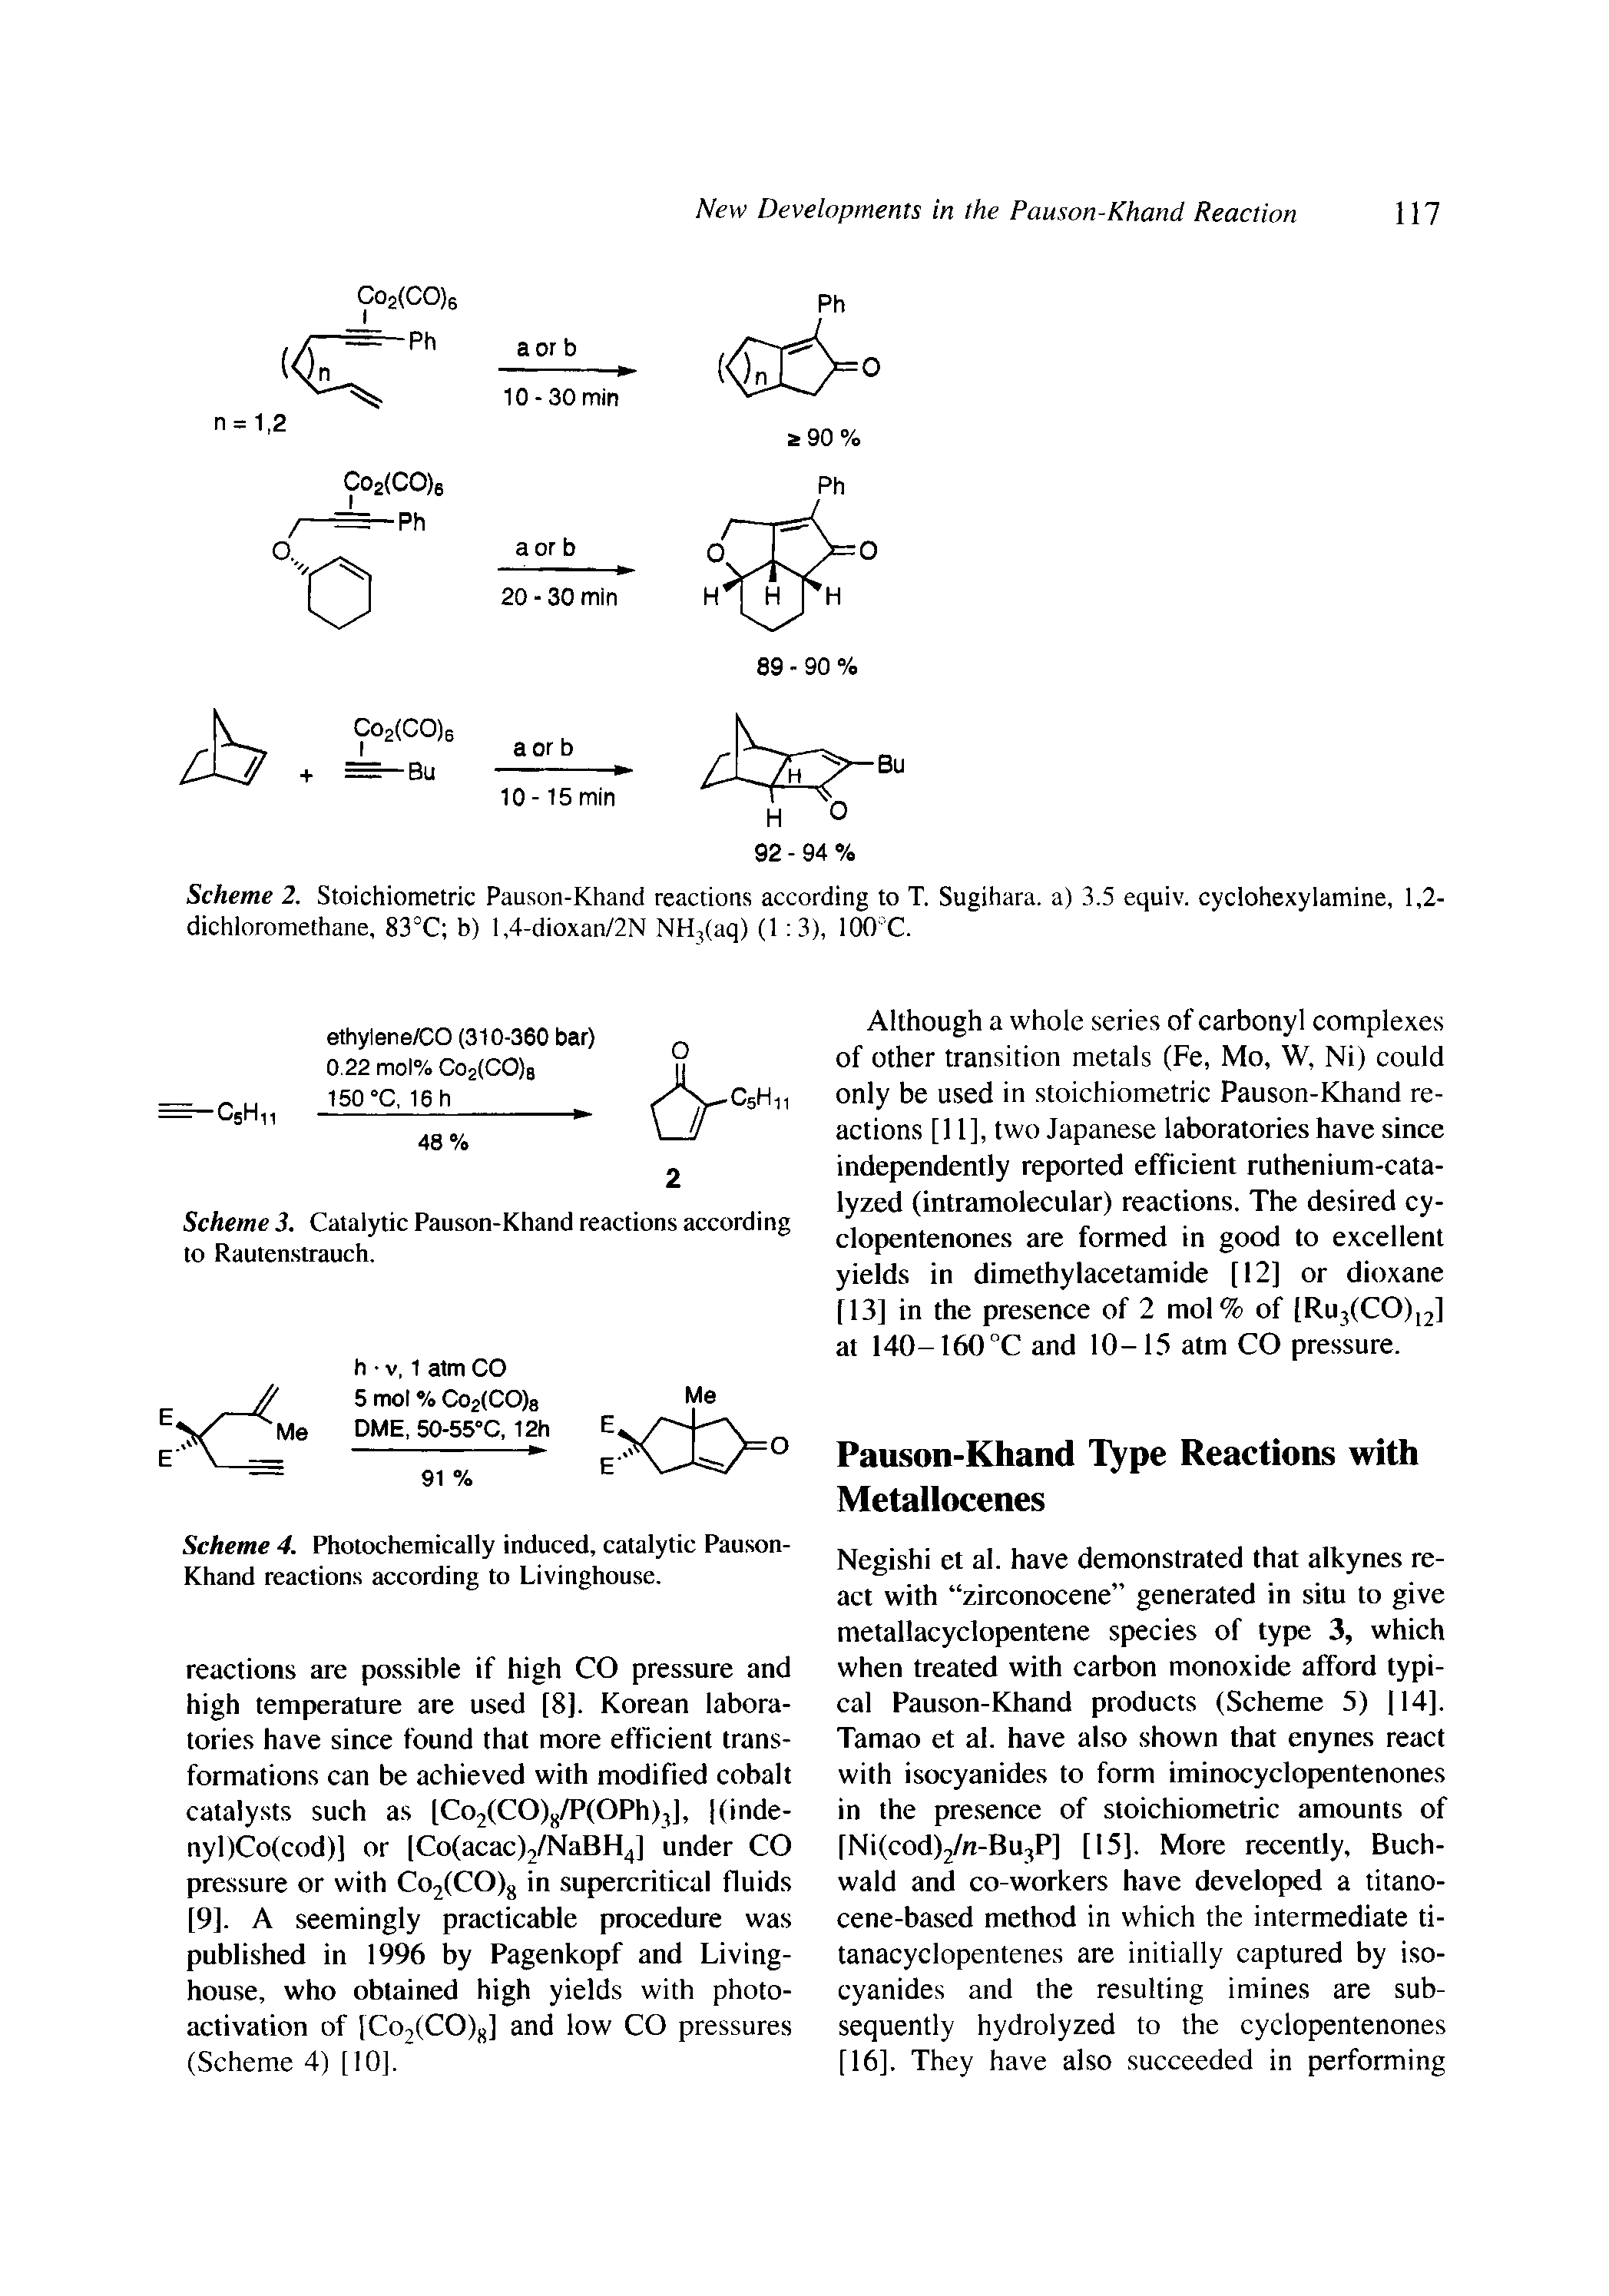 Scheme 3. Catalytic Pauson-Khand reactions according to Rauten.strauch.